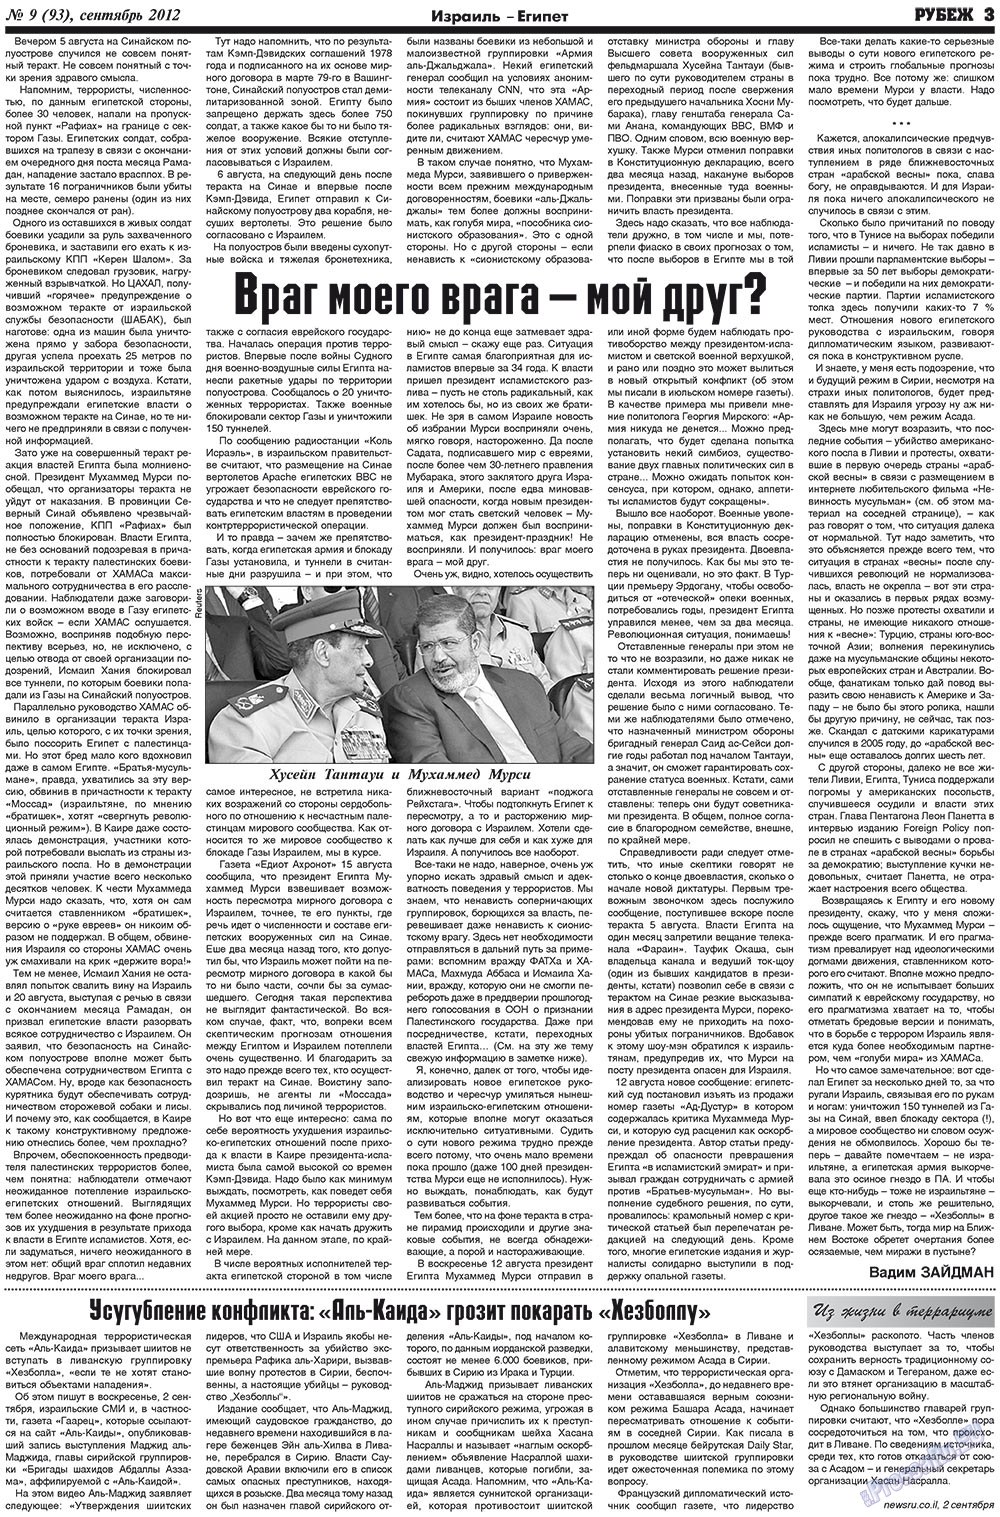 Рубеж, газета. 2012 №9 стр.3